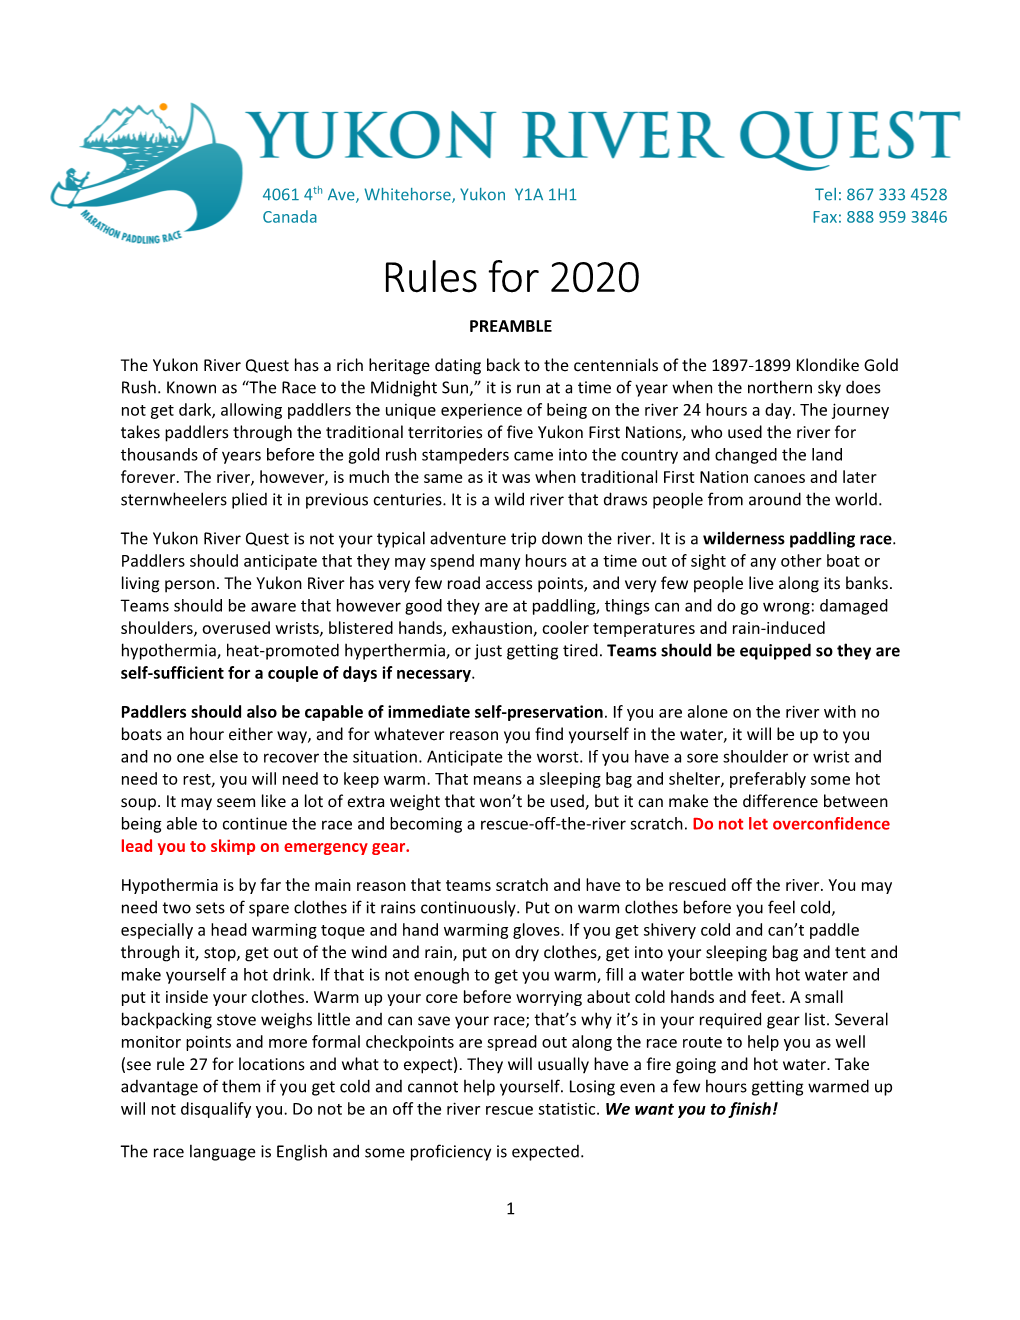 YRQ Rules 2020